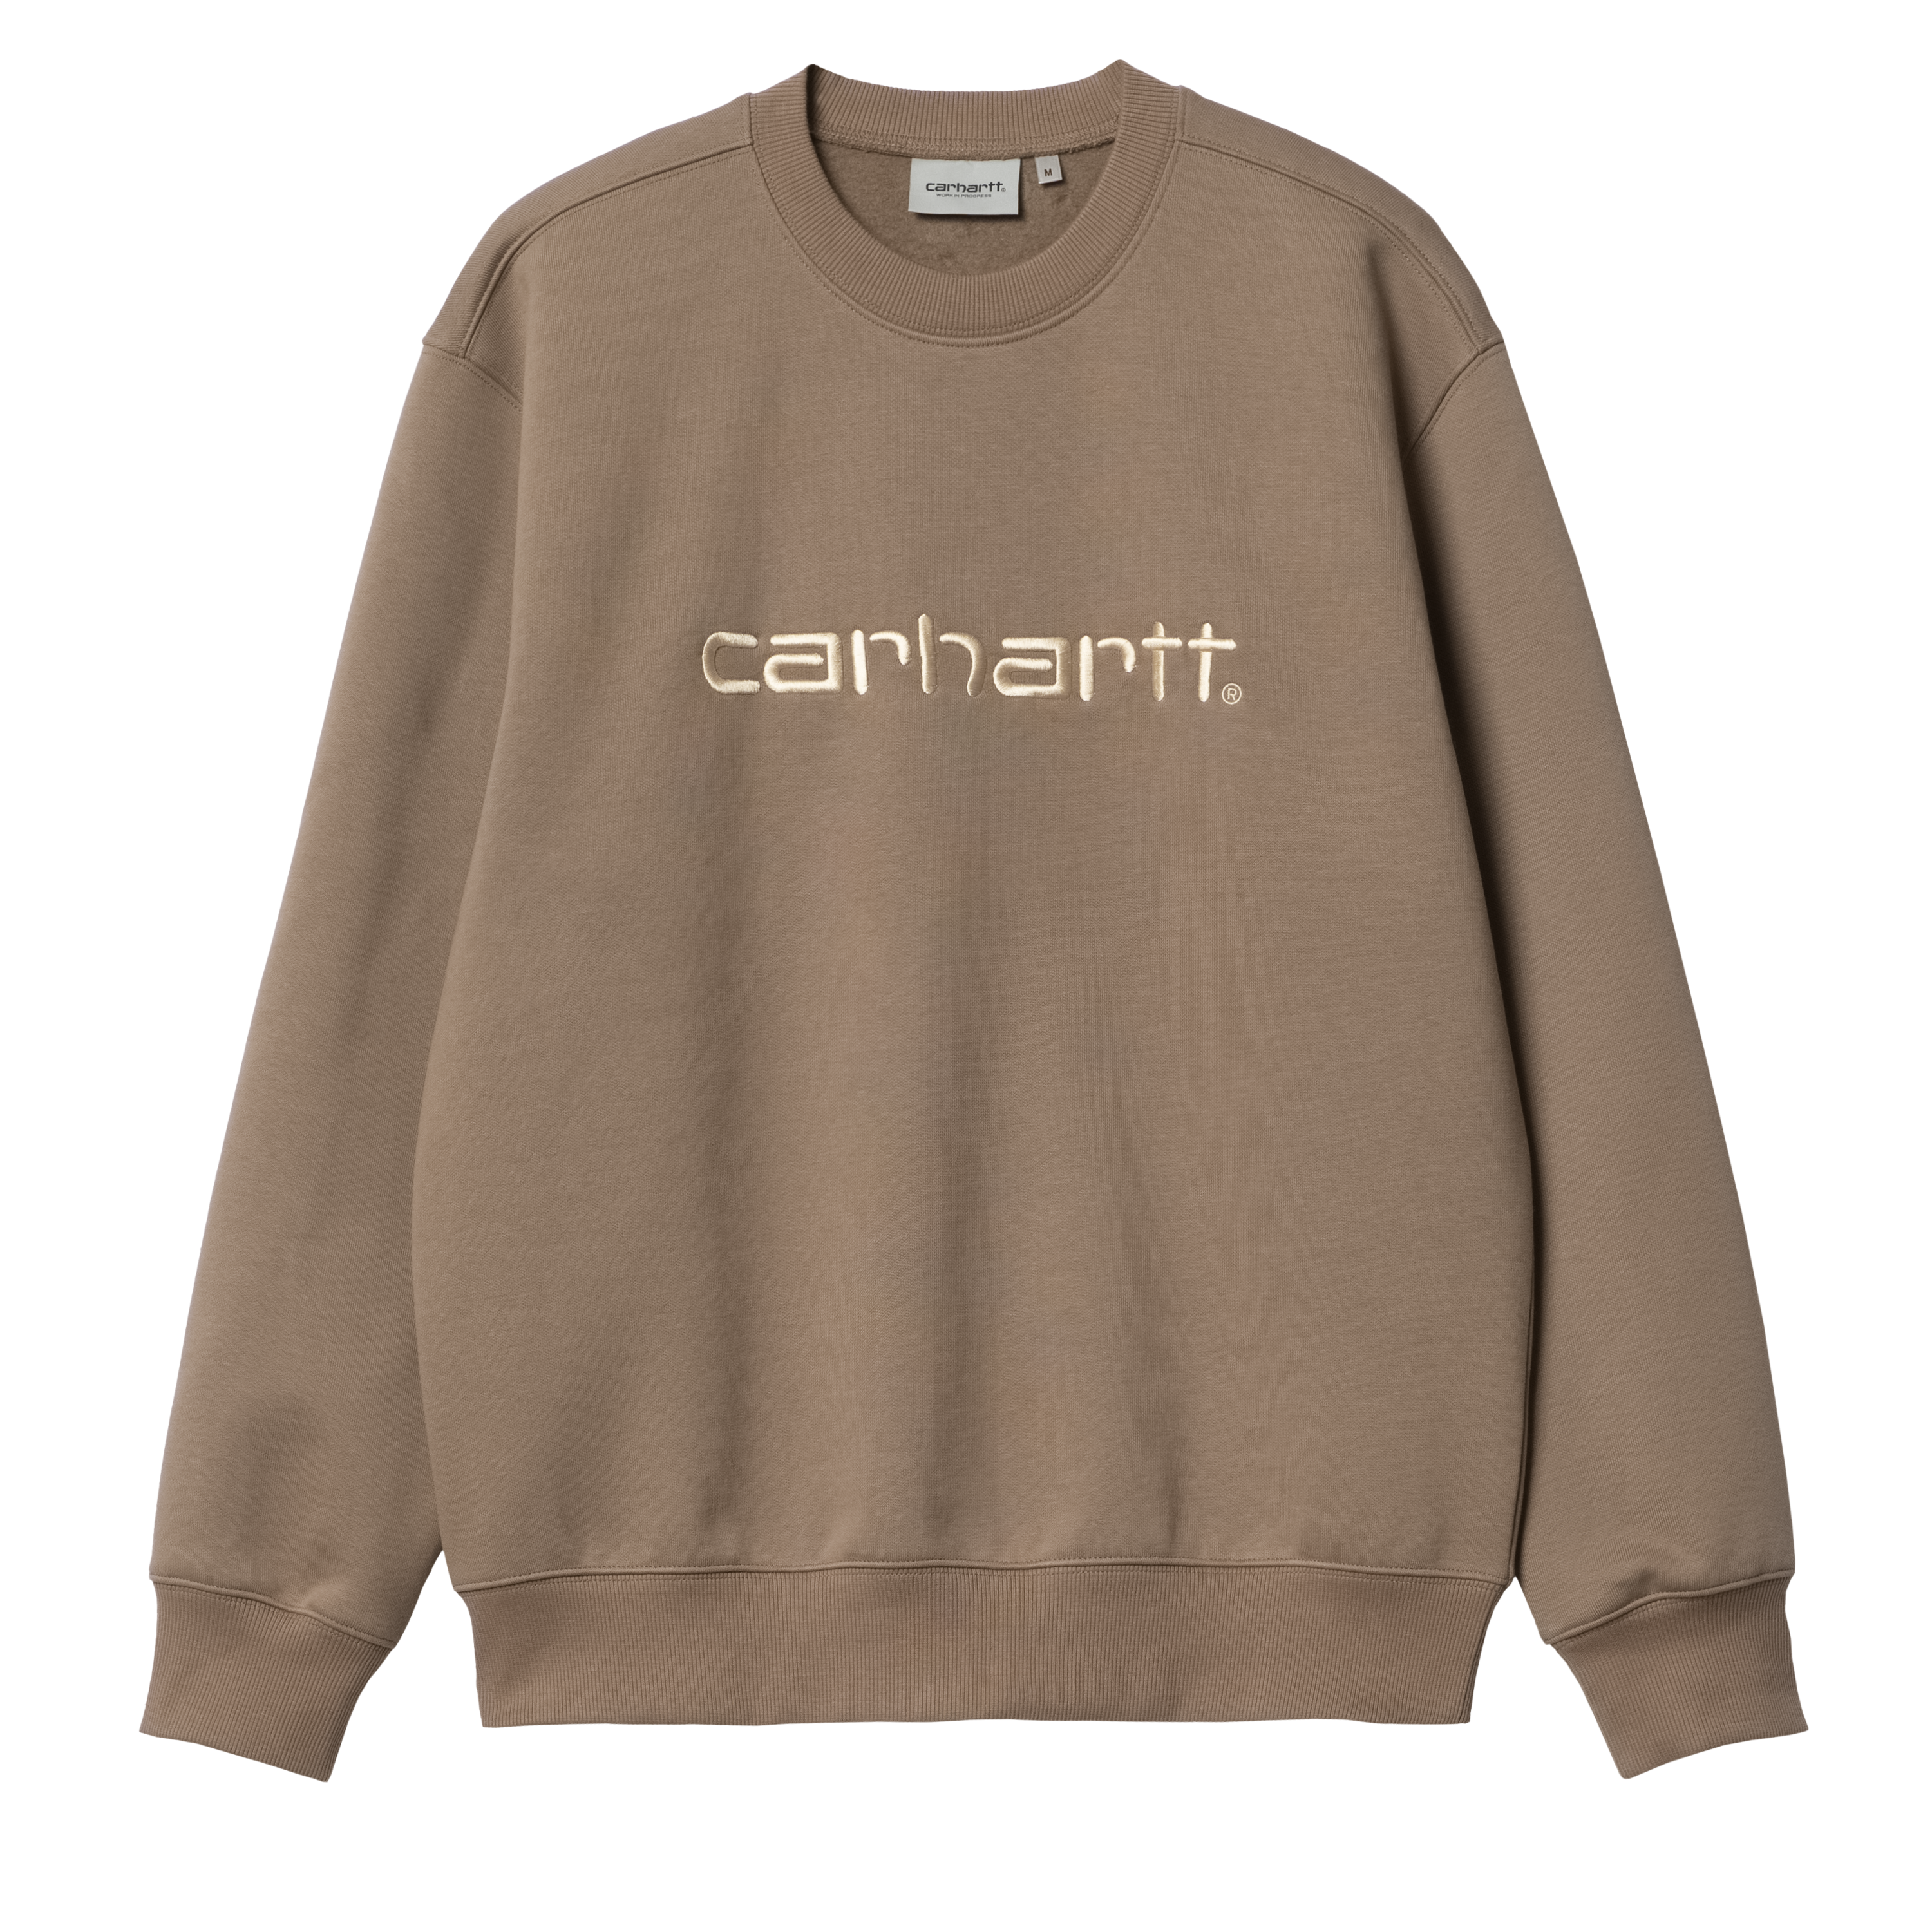 Carhartt WIP Carhartt Sweatshirt in Braun